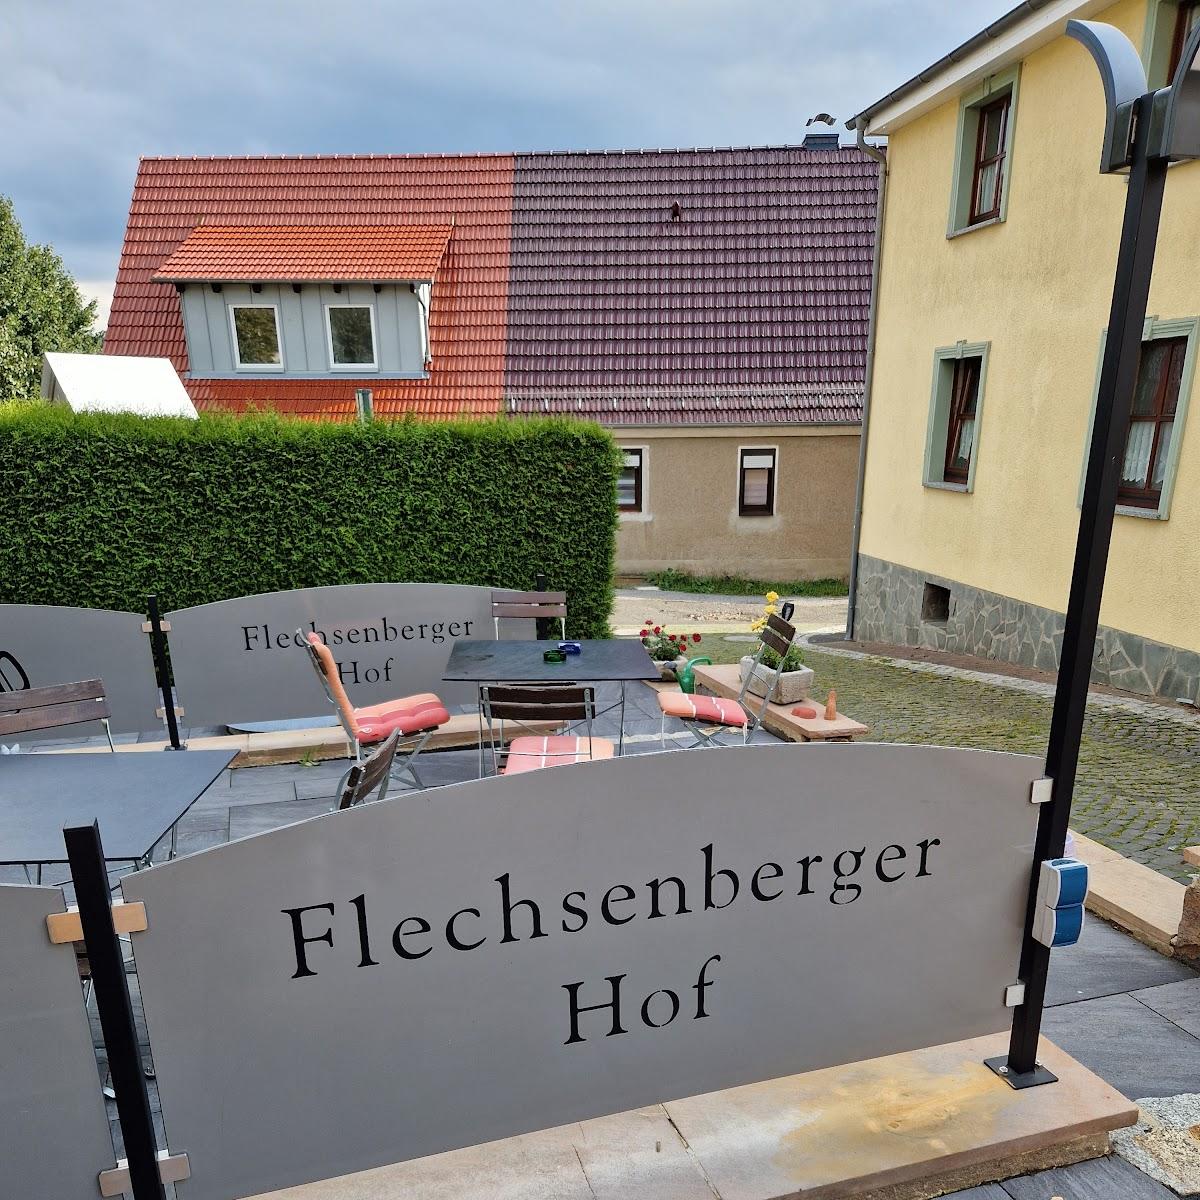 Restaurant "Flechsenberger Hof" in Birx